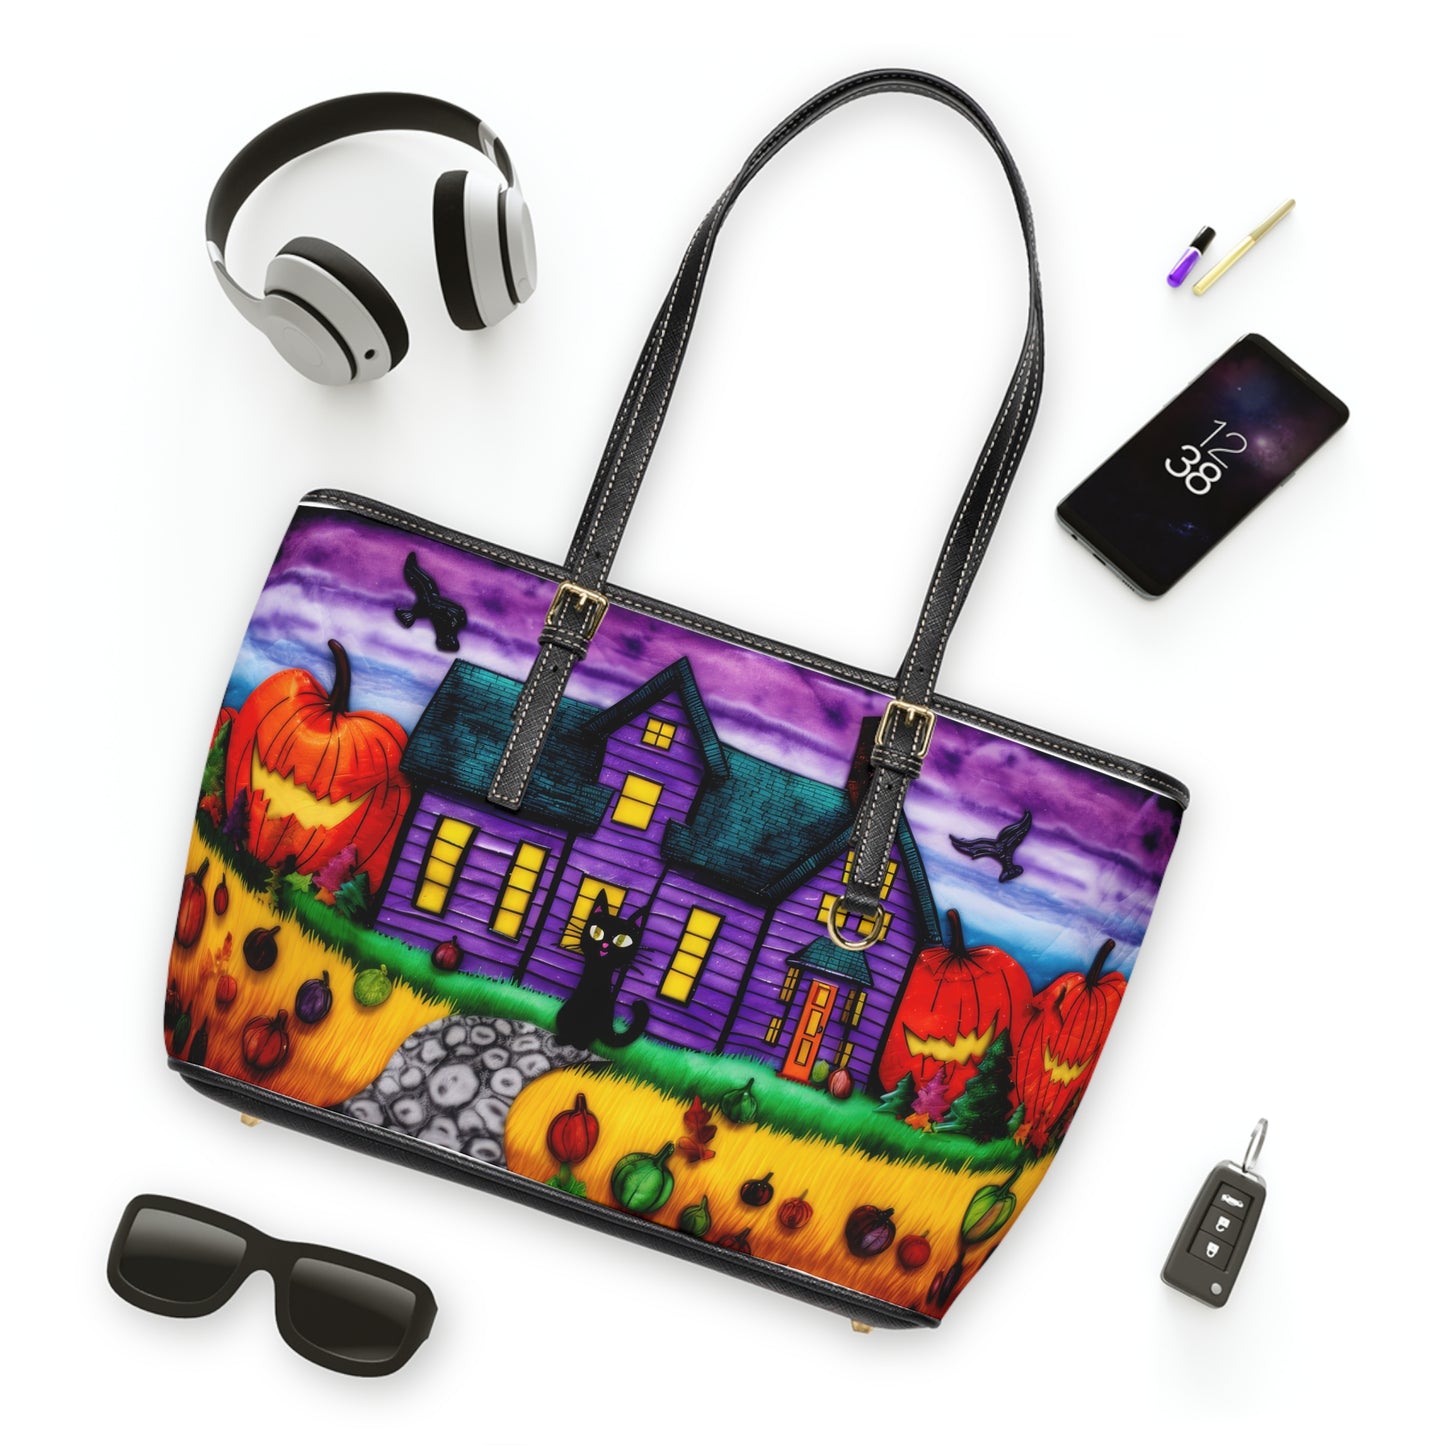 Purple- Orange Halloween, Fall Time Black Cat With Pumpkins And Purple House PU Leather Shoulder Bag